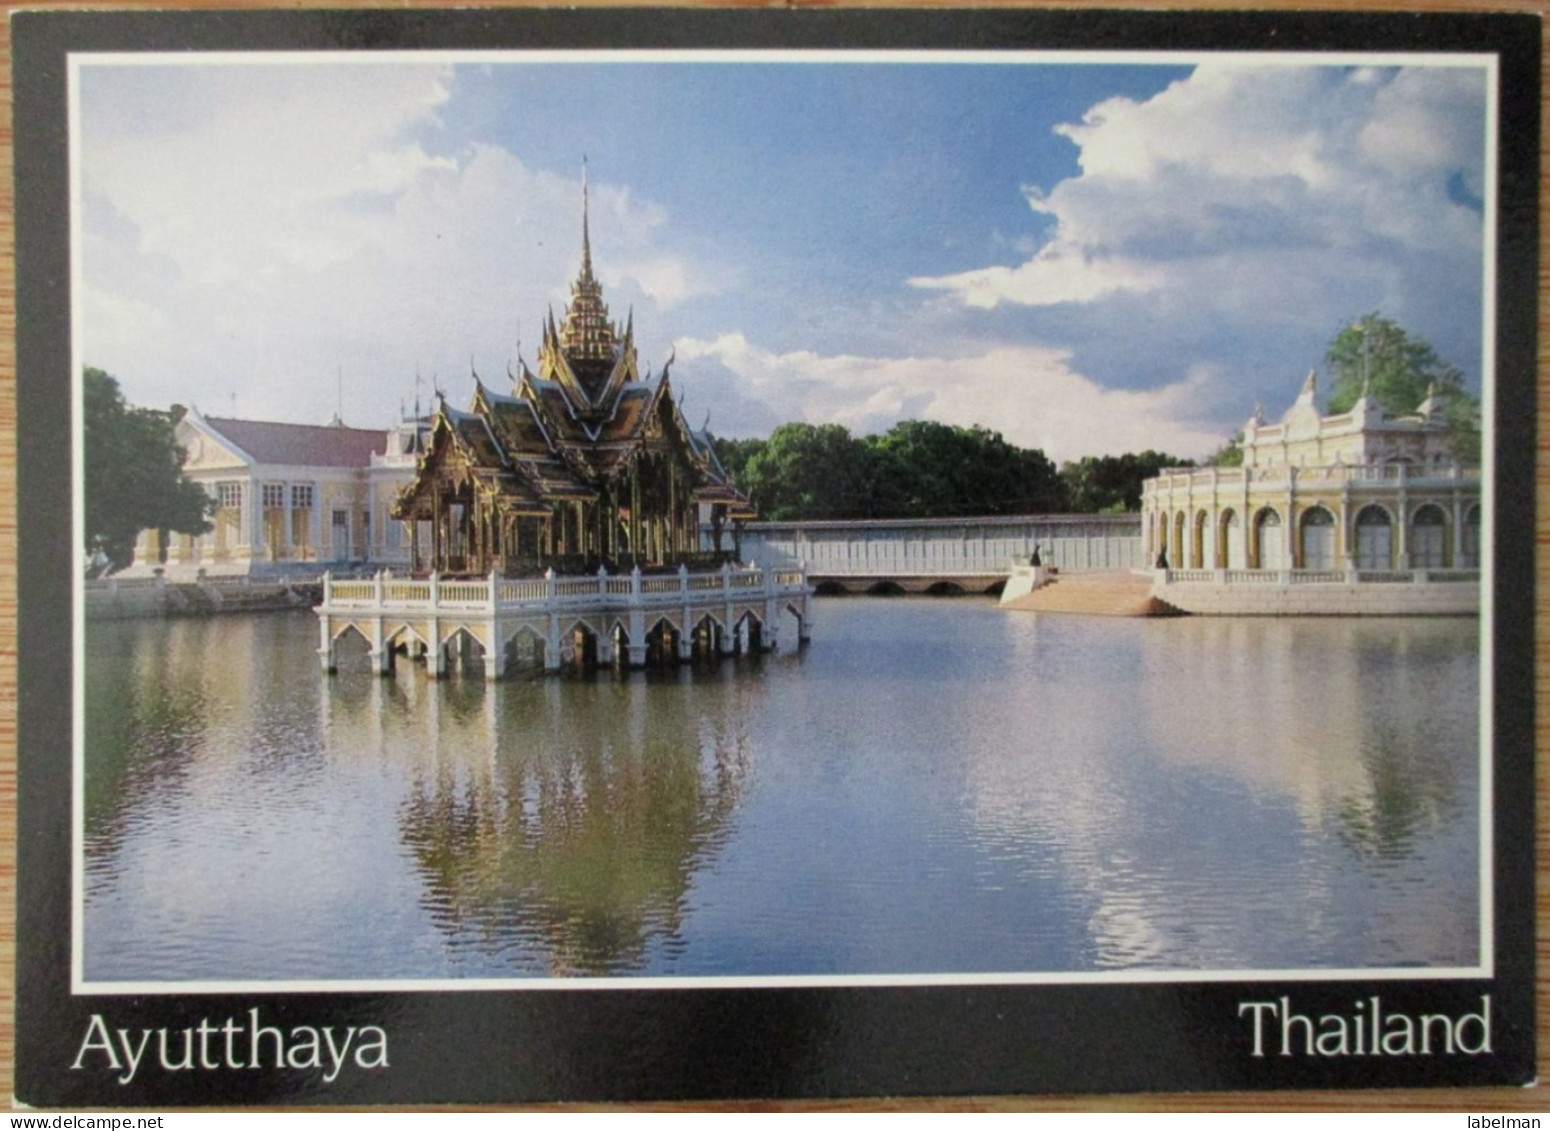 THAILAND BANG PA IN AYUTTHAYA CARTE POSTALE POSTKARTE POSTCARD ANSICHTSKARTE PICTURE CARTOLINA PHOTO CARD - Thaïland